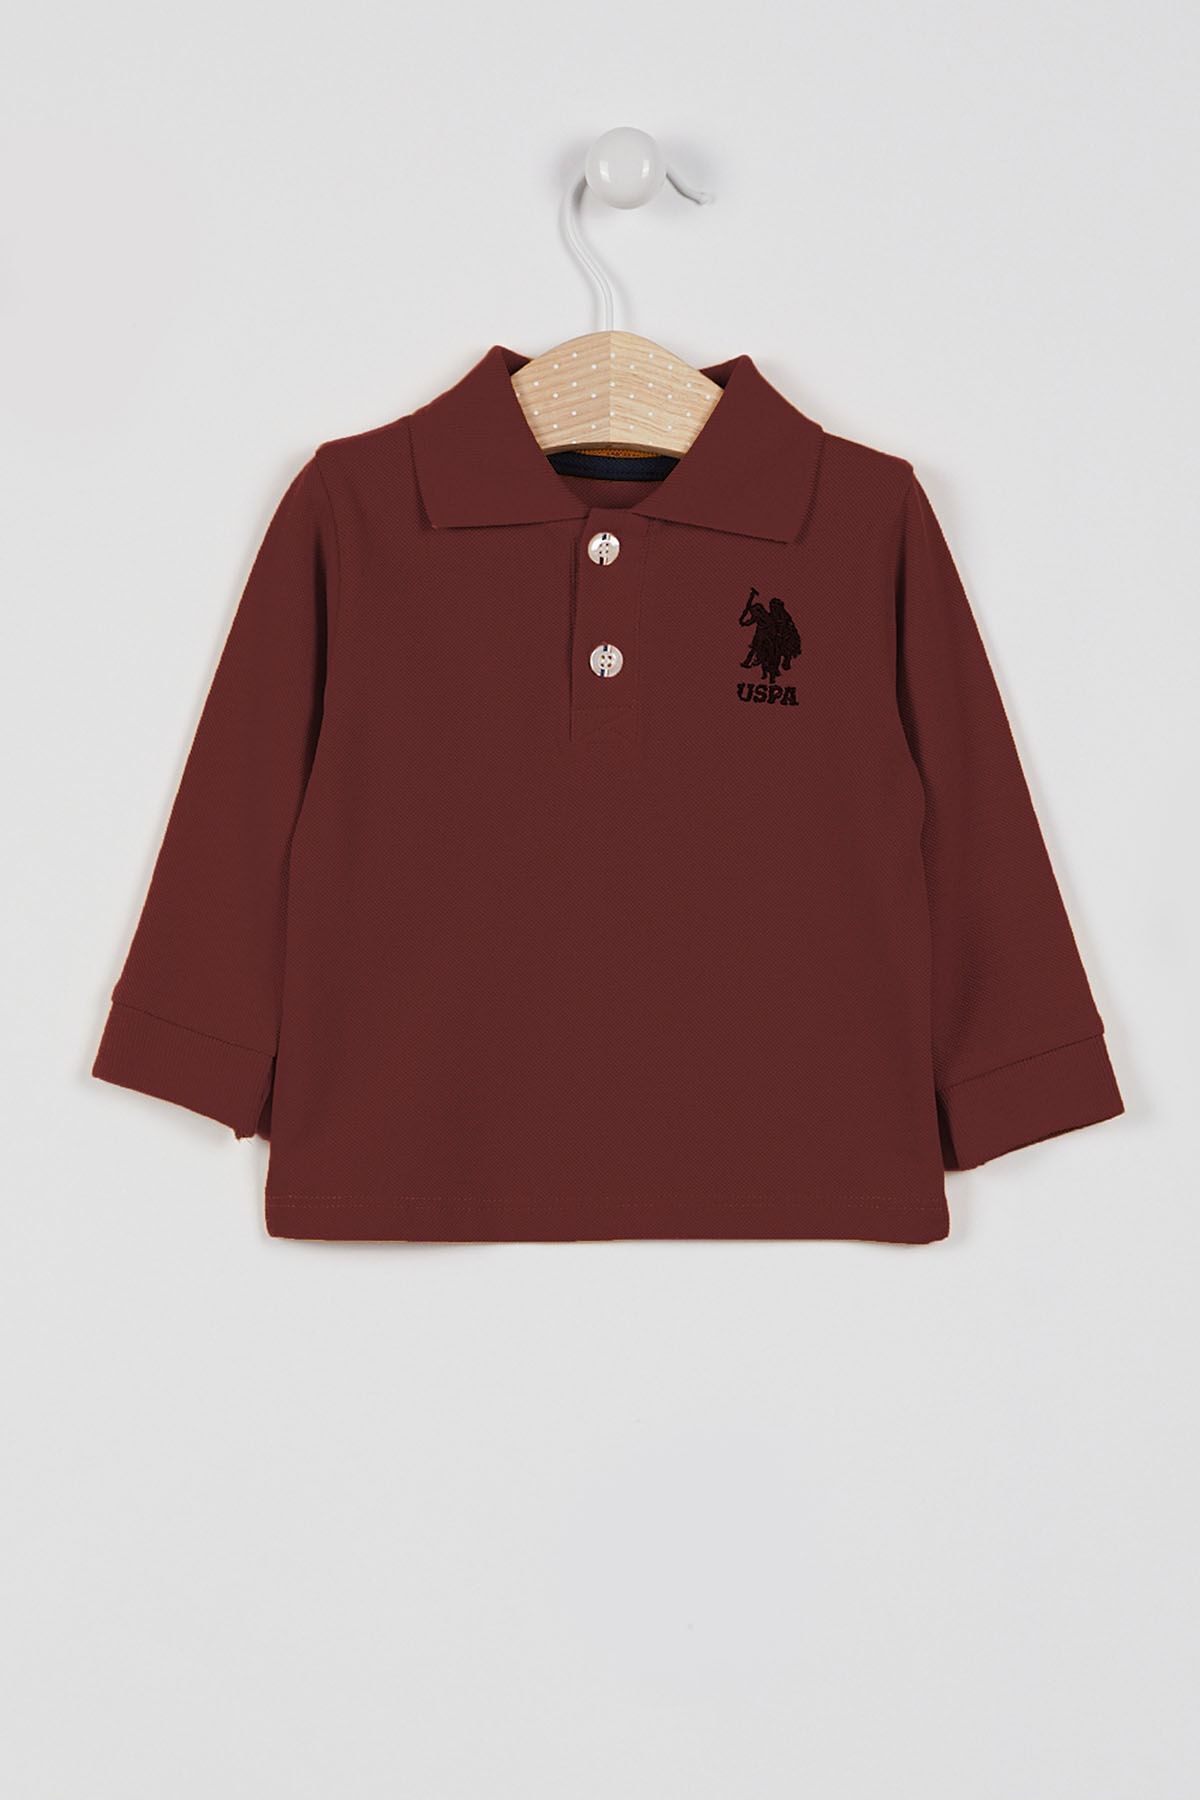 US Polo Assn. Boys' Classic Polo Shirt